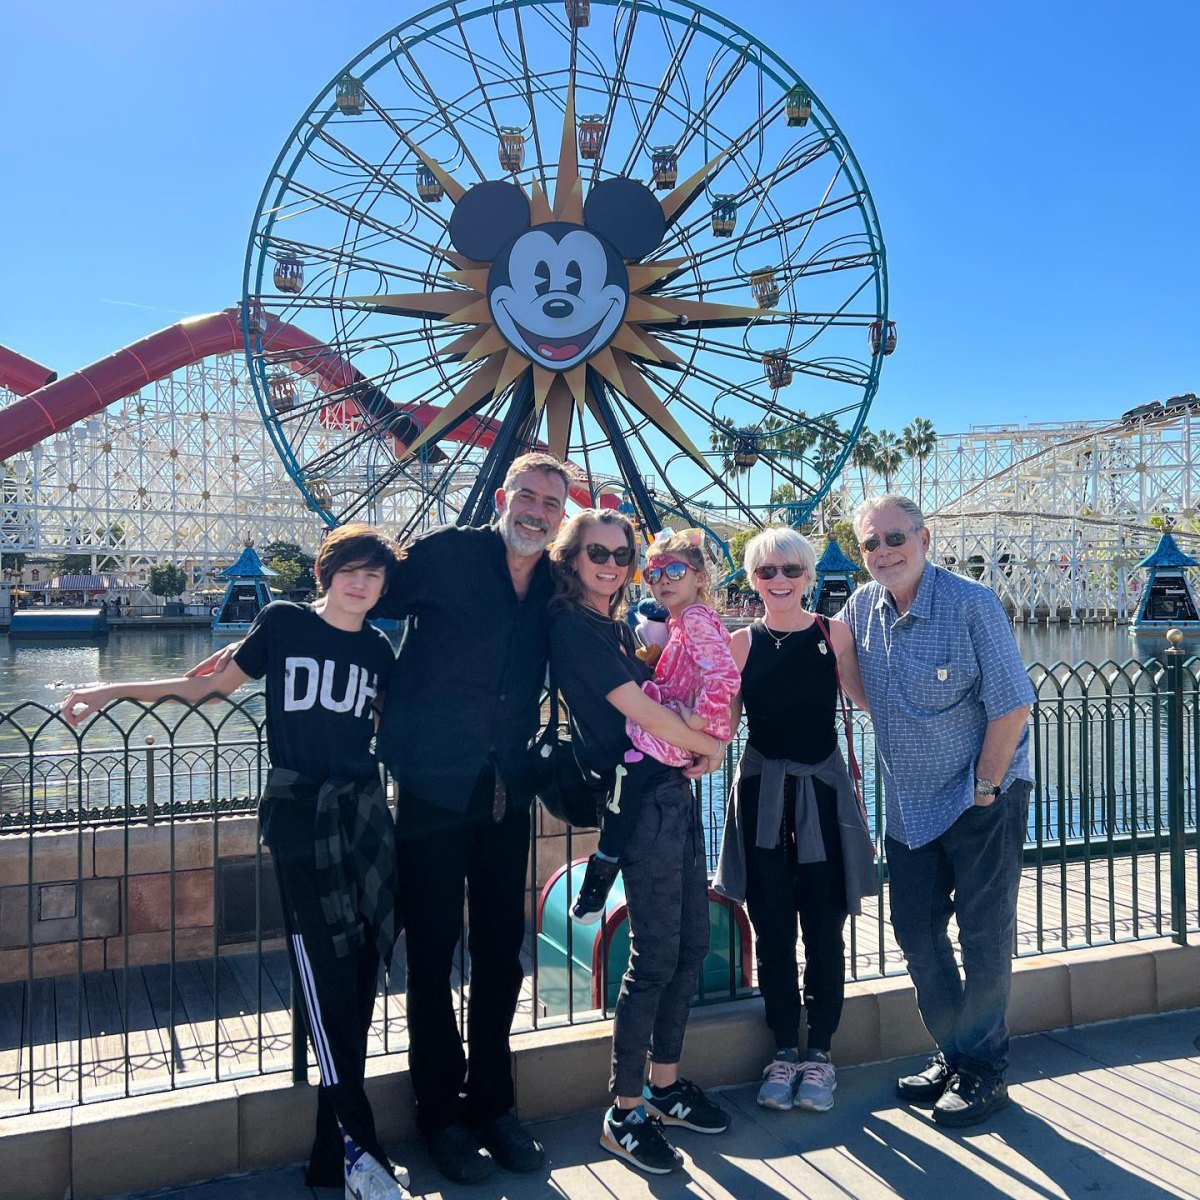 Kelly Recker on X: Happy birthday @Disneyland !!! We had the best